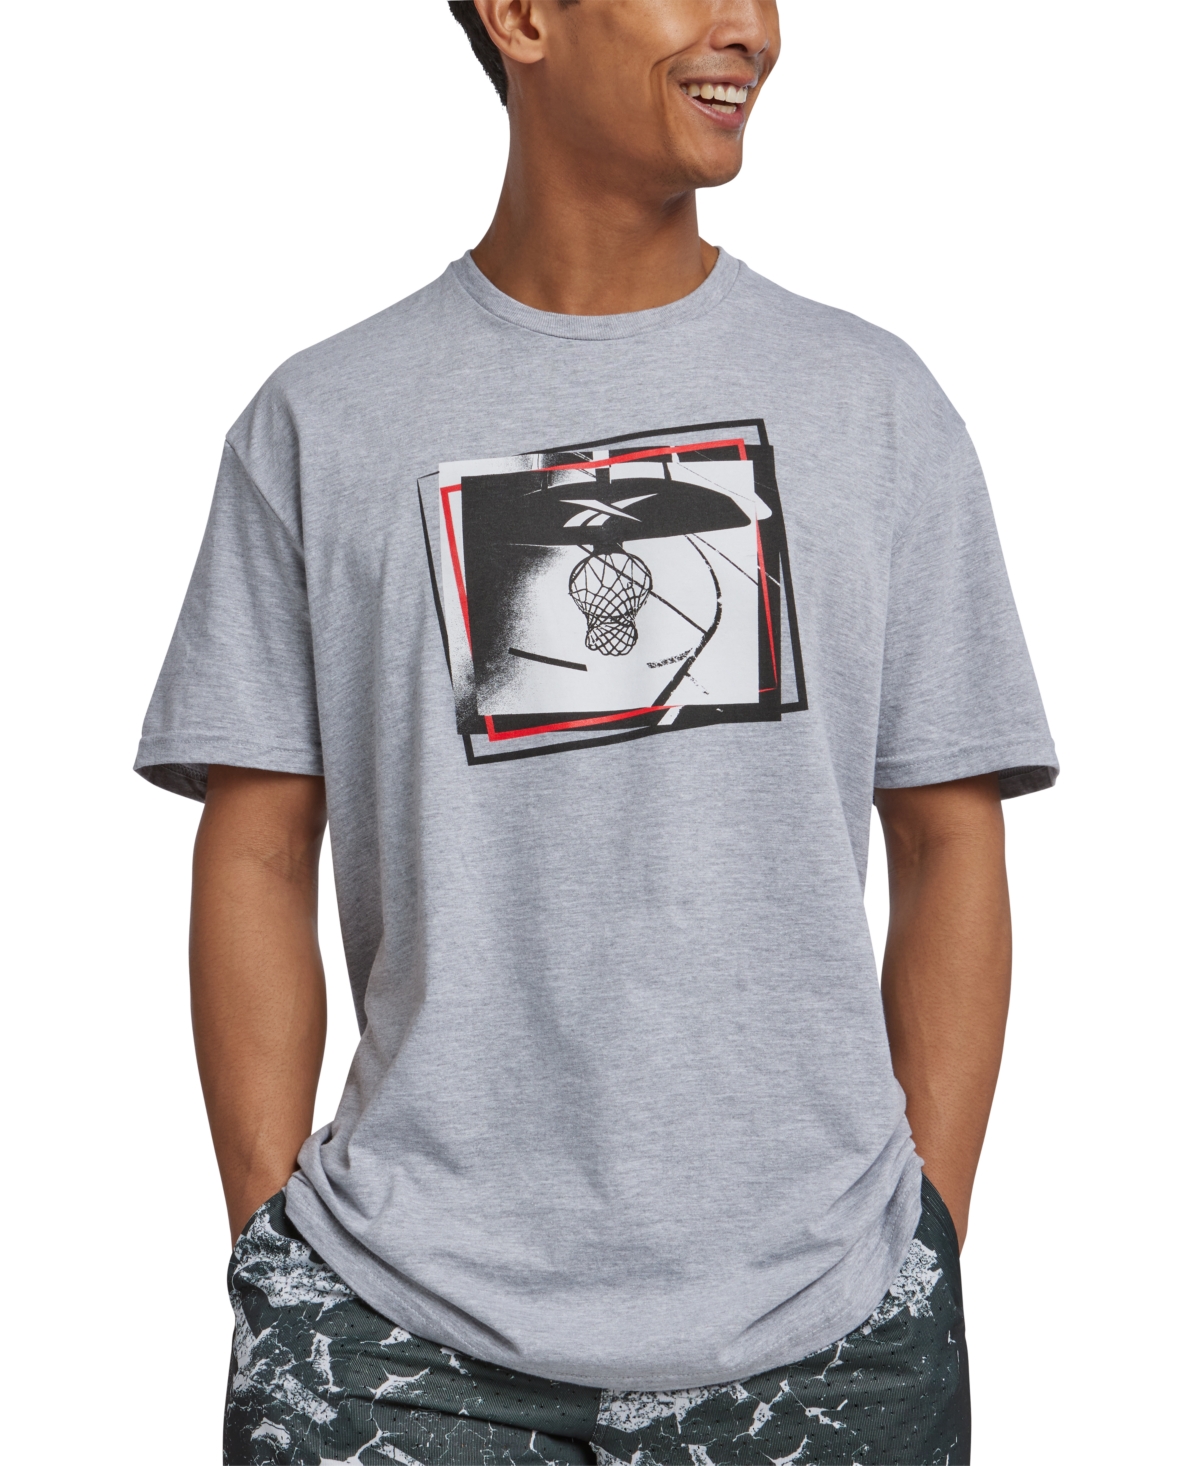 Men's B-Ball Hoop Graphic T-Shirt - Grey Heather/black/red